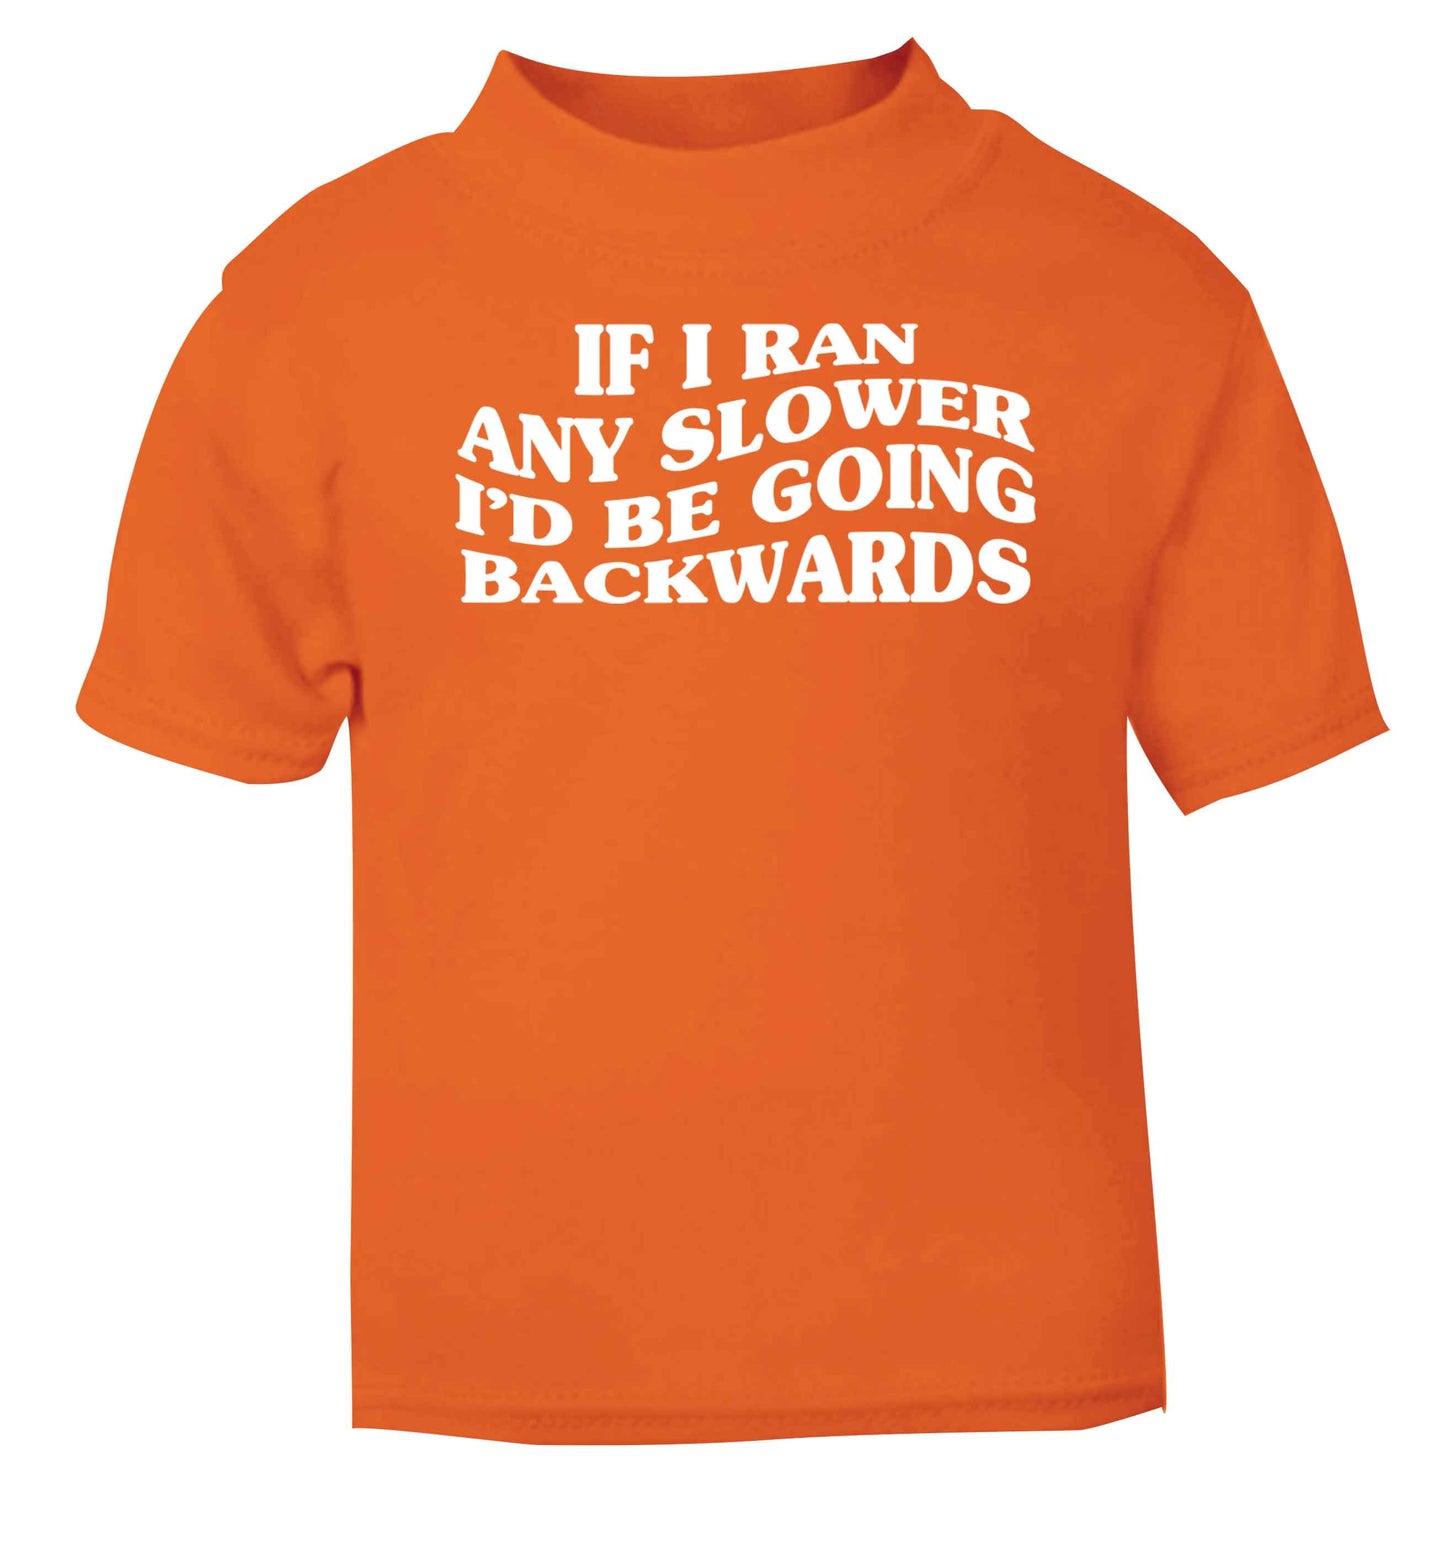 If I ran any slower I'd be going backwards orange baby toddler Tshirt 2 Years